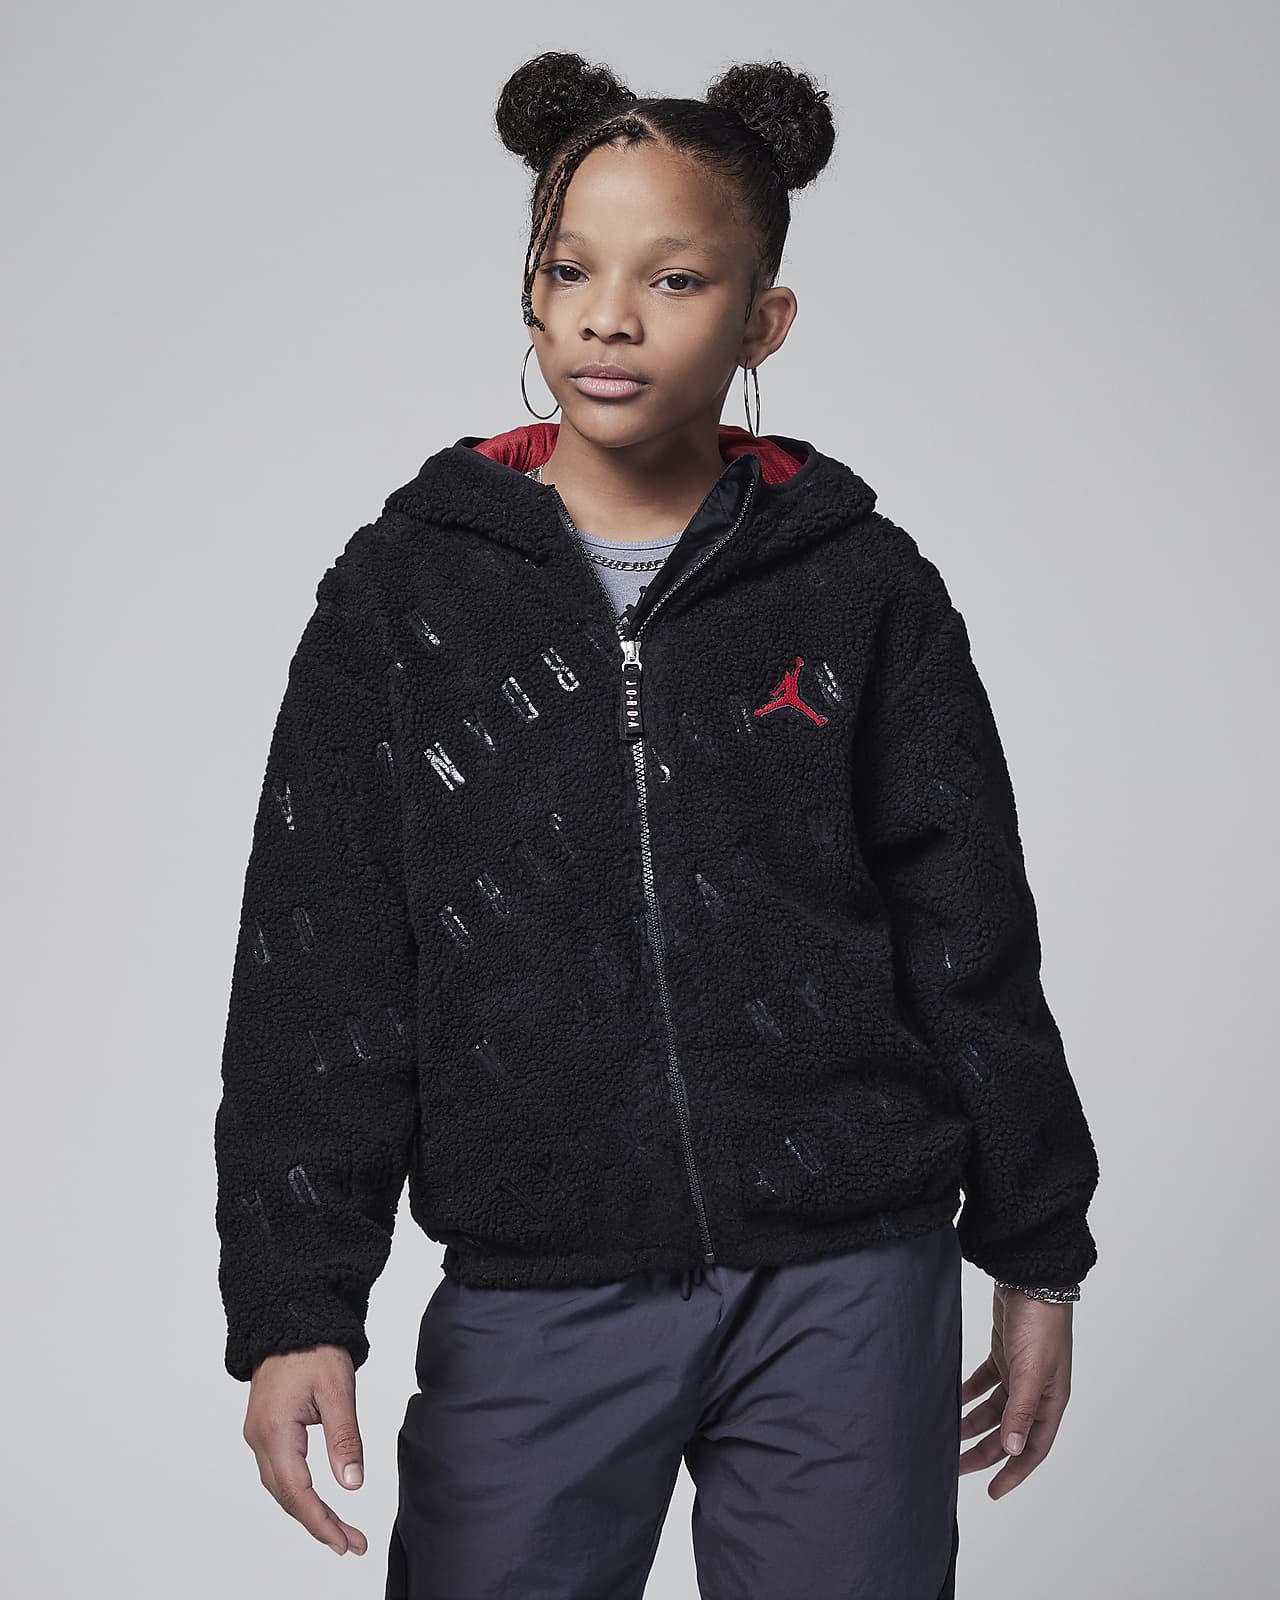 Jordan Jacquard Sherpa Jacket Older Kids' Jacket